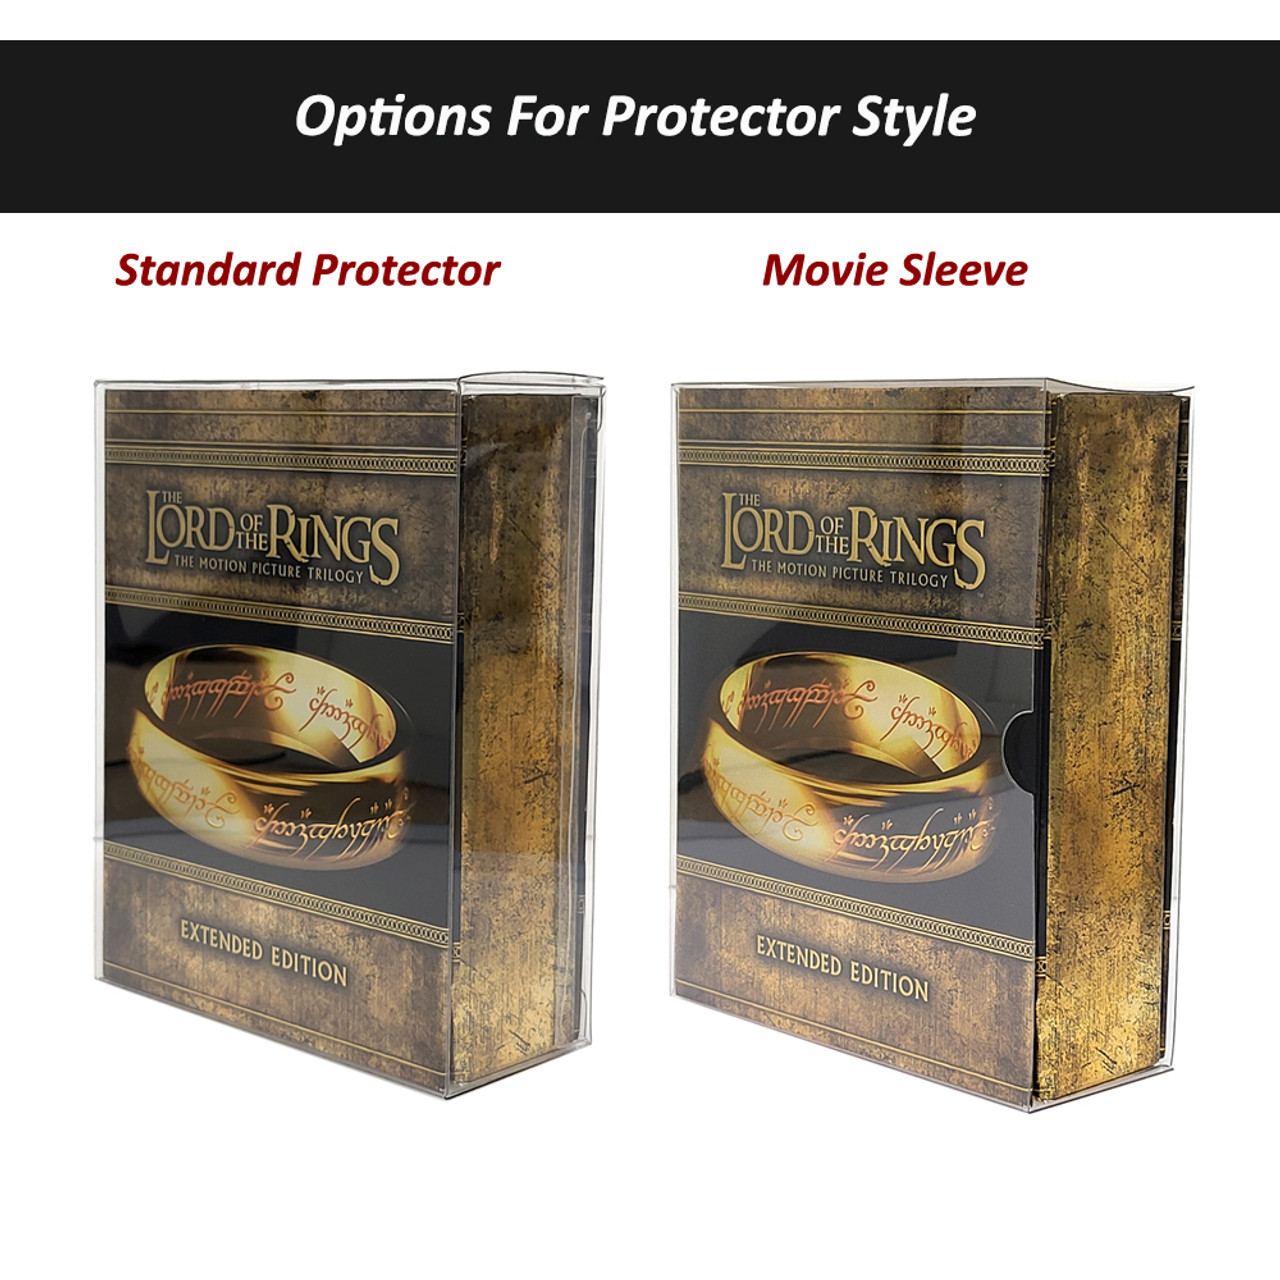 Protector For Sleepaway Camp Survival Kit DVD